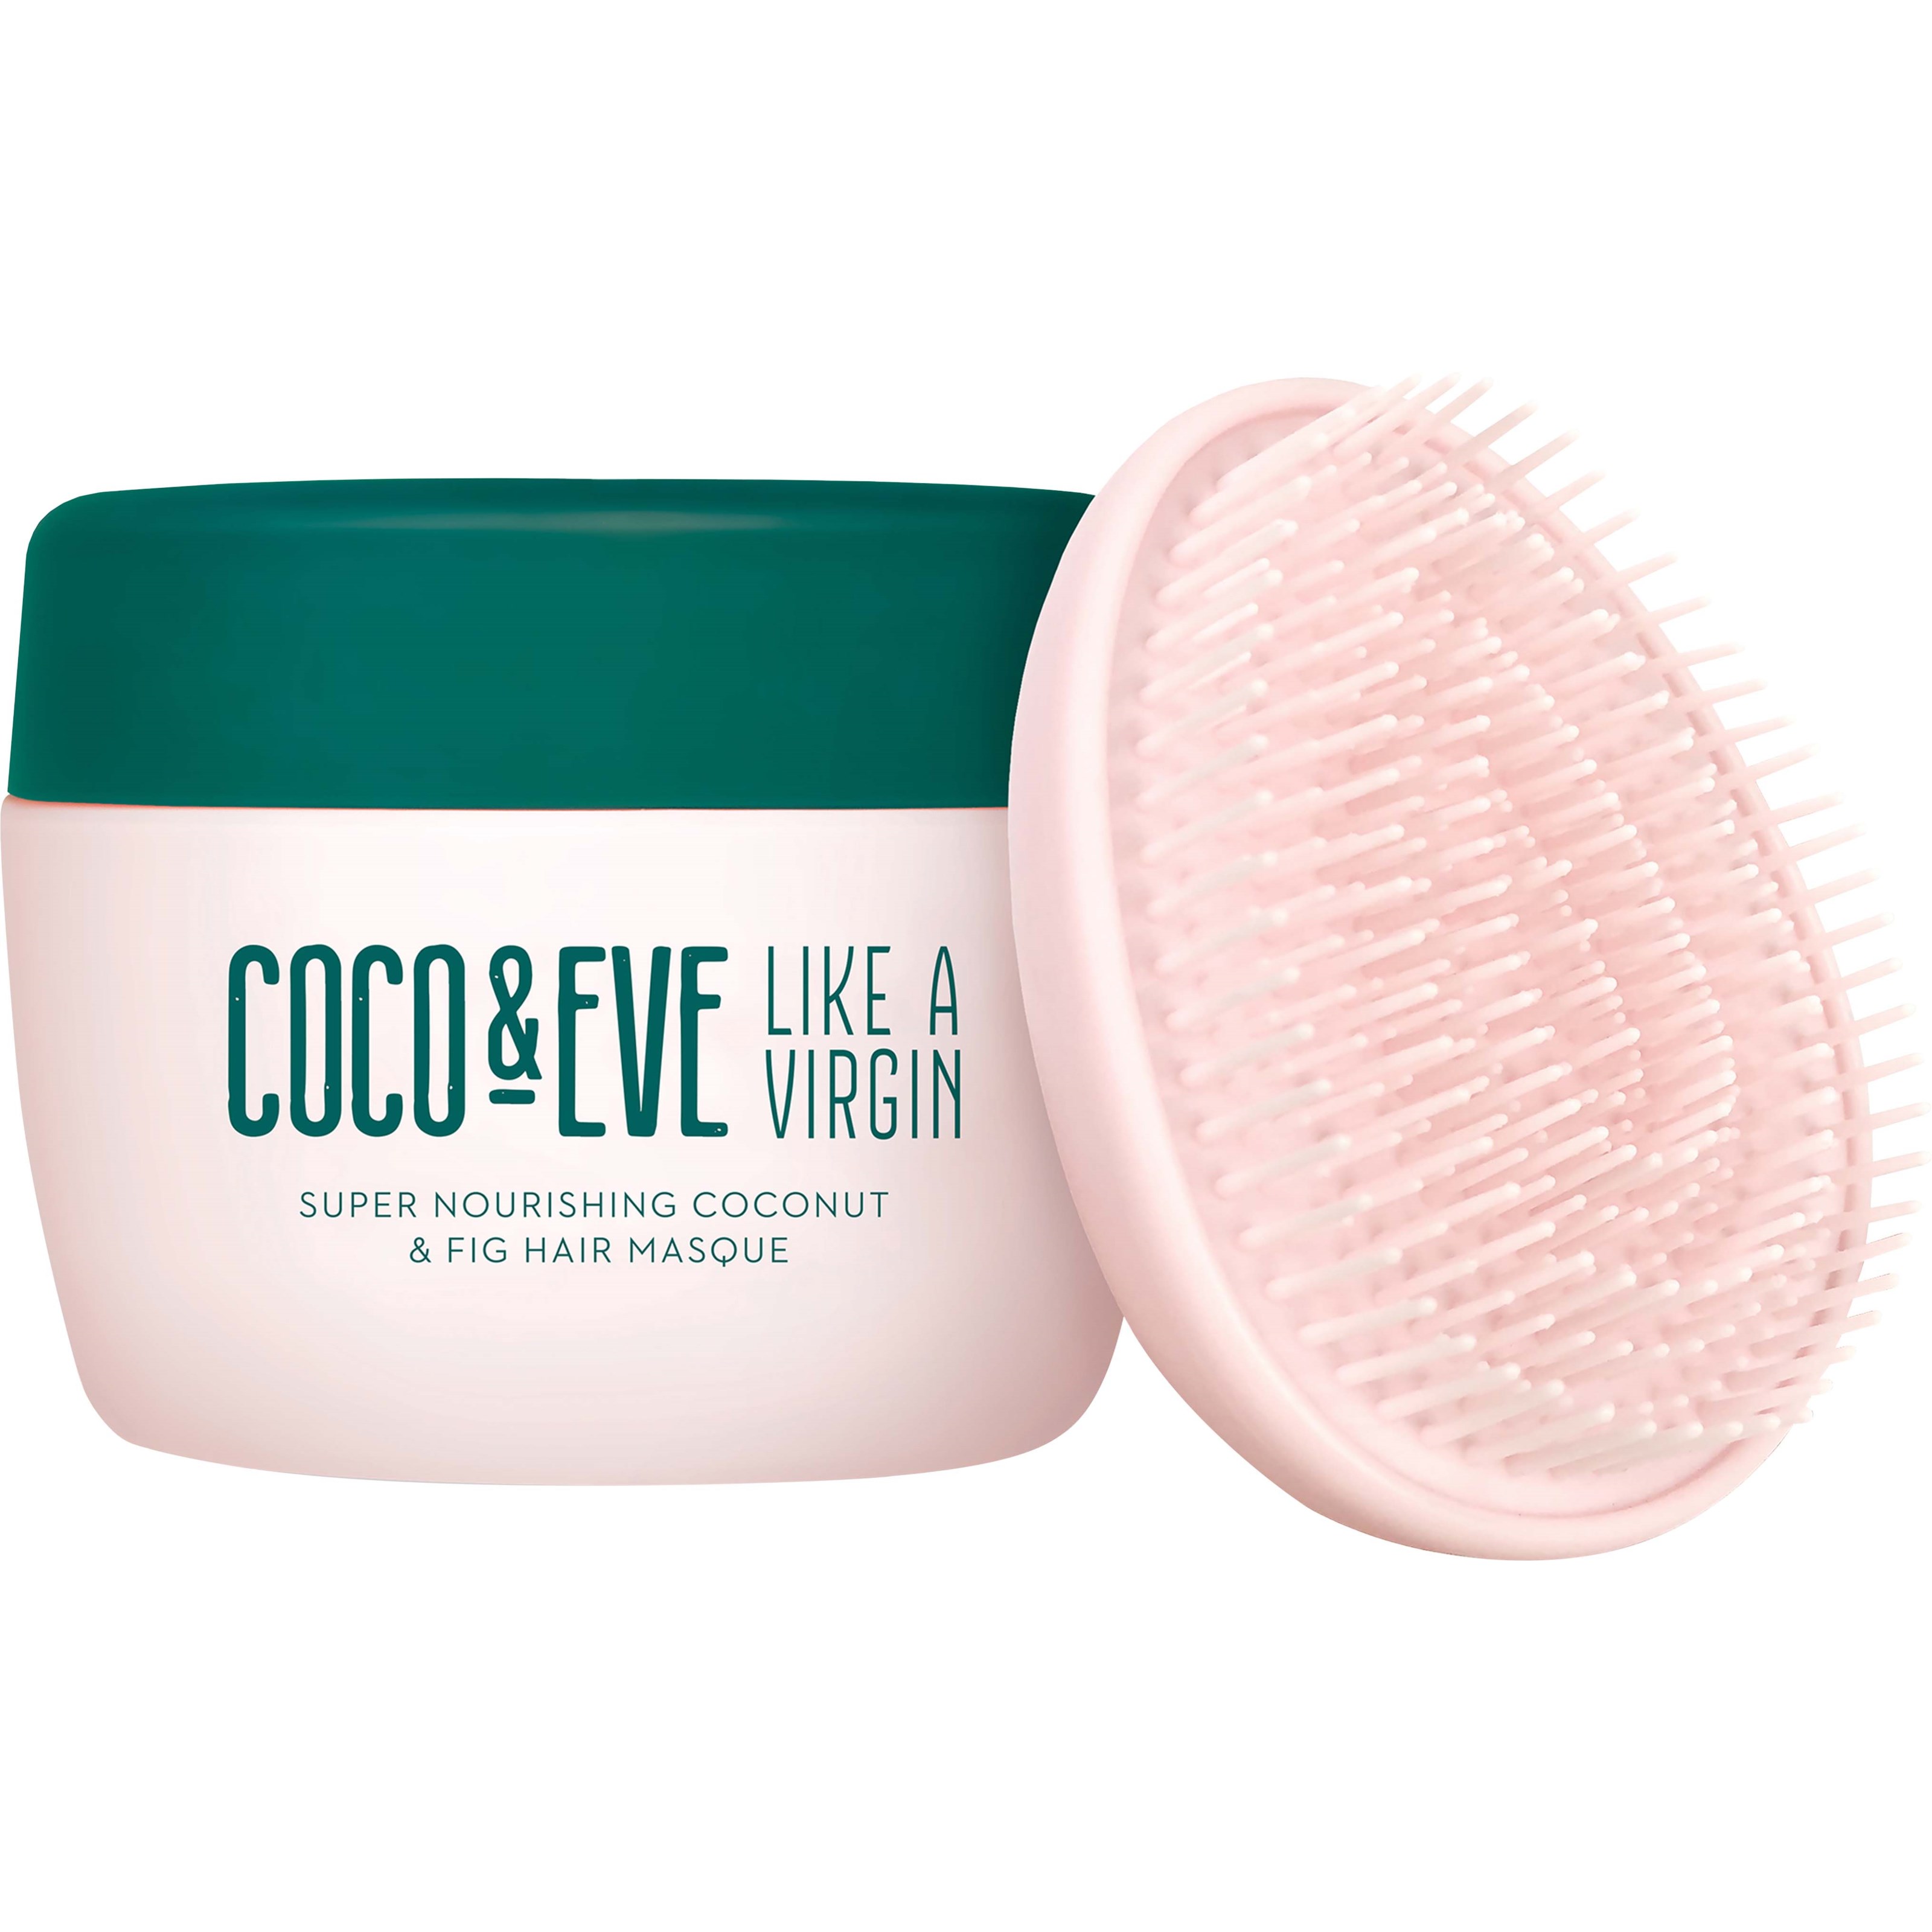 Bilde av Coco & Eve Like A Virgin Super Nourishing Coconut & Fig Hair Masque 21